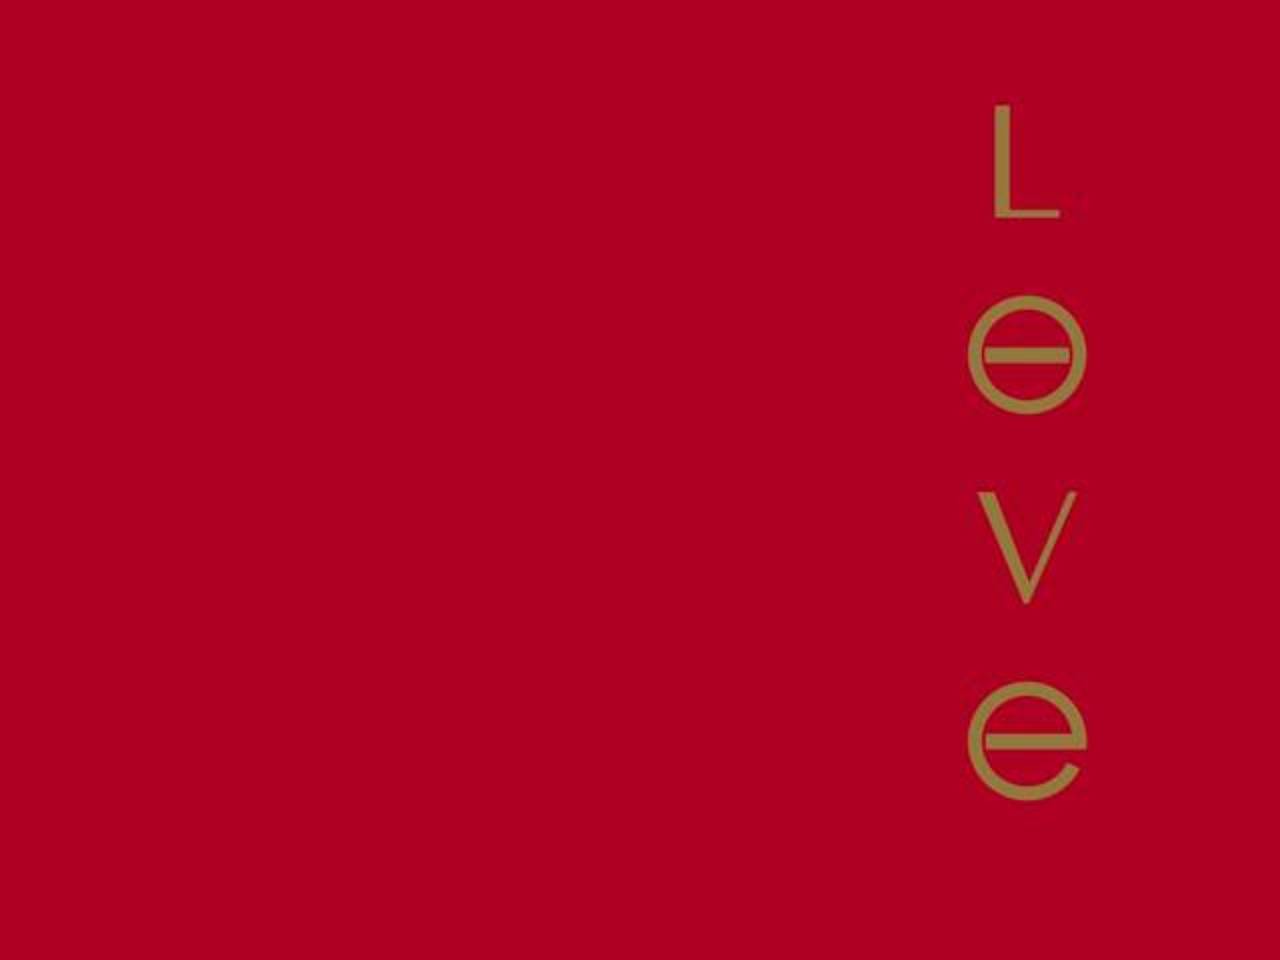 Love Day Campaign by CARTIER | SENATUS